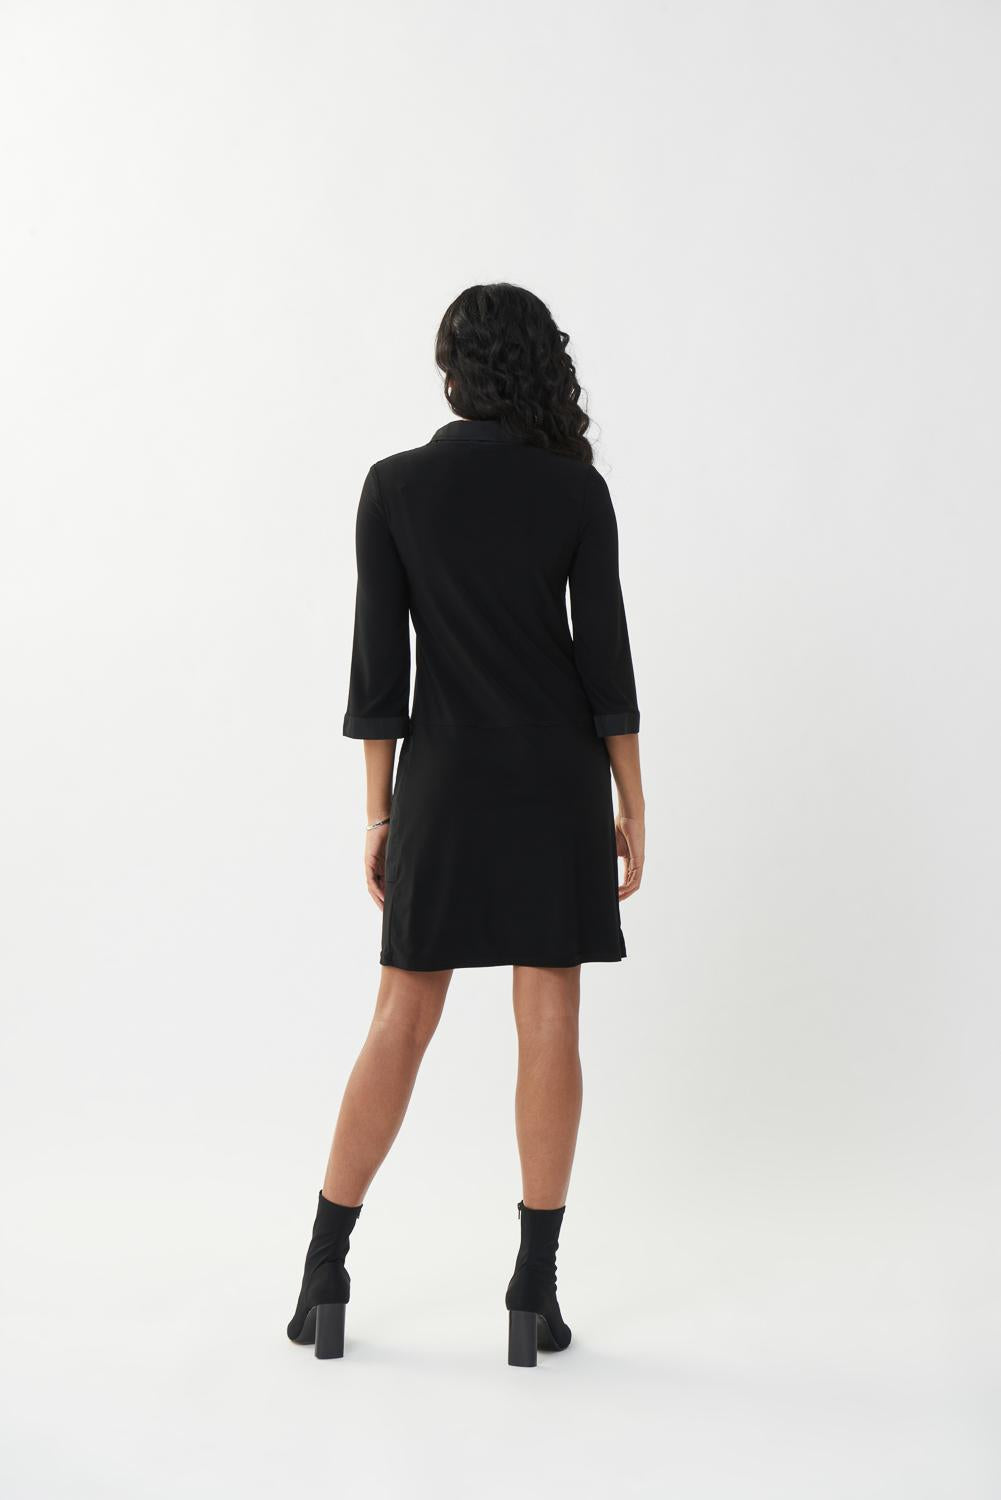 Leatherette Trim Dress Style 223142 Color Black Joseph Ribkoff